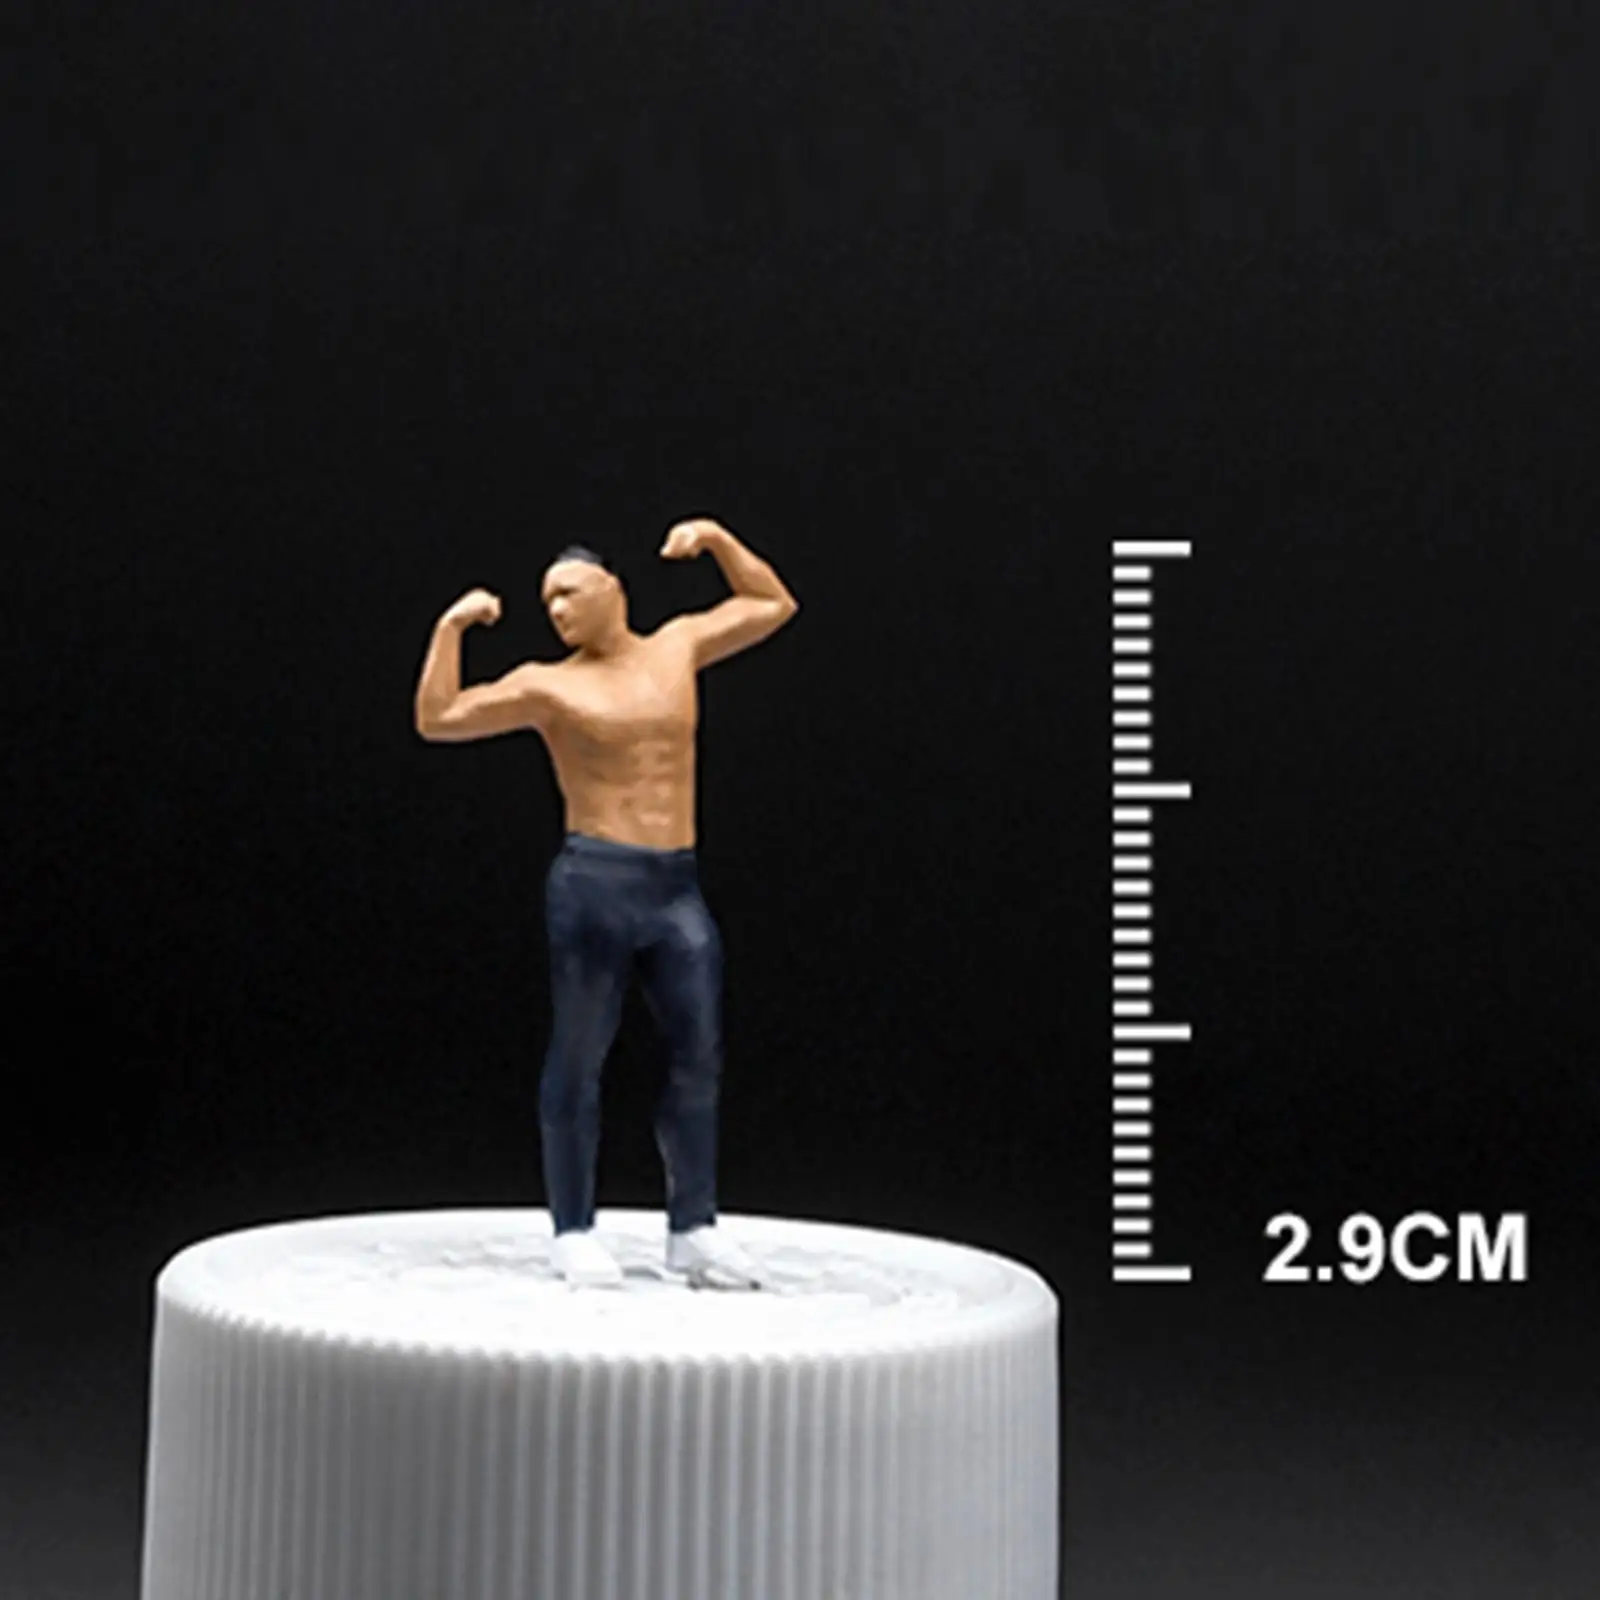 1/64 Scale Handmade Miniature Figurines Model Accessories Waterproof Fine Workmanship Multifunctional Cute for Bodybuilder